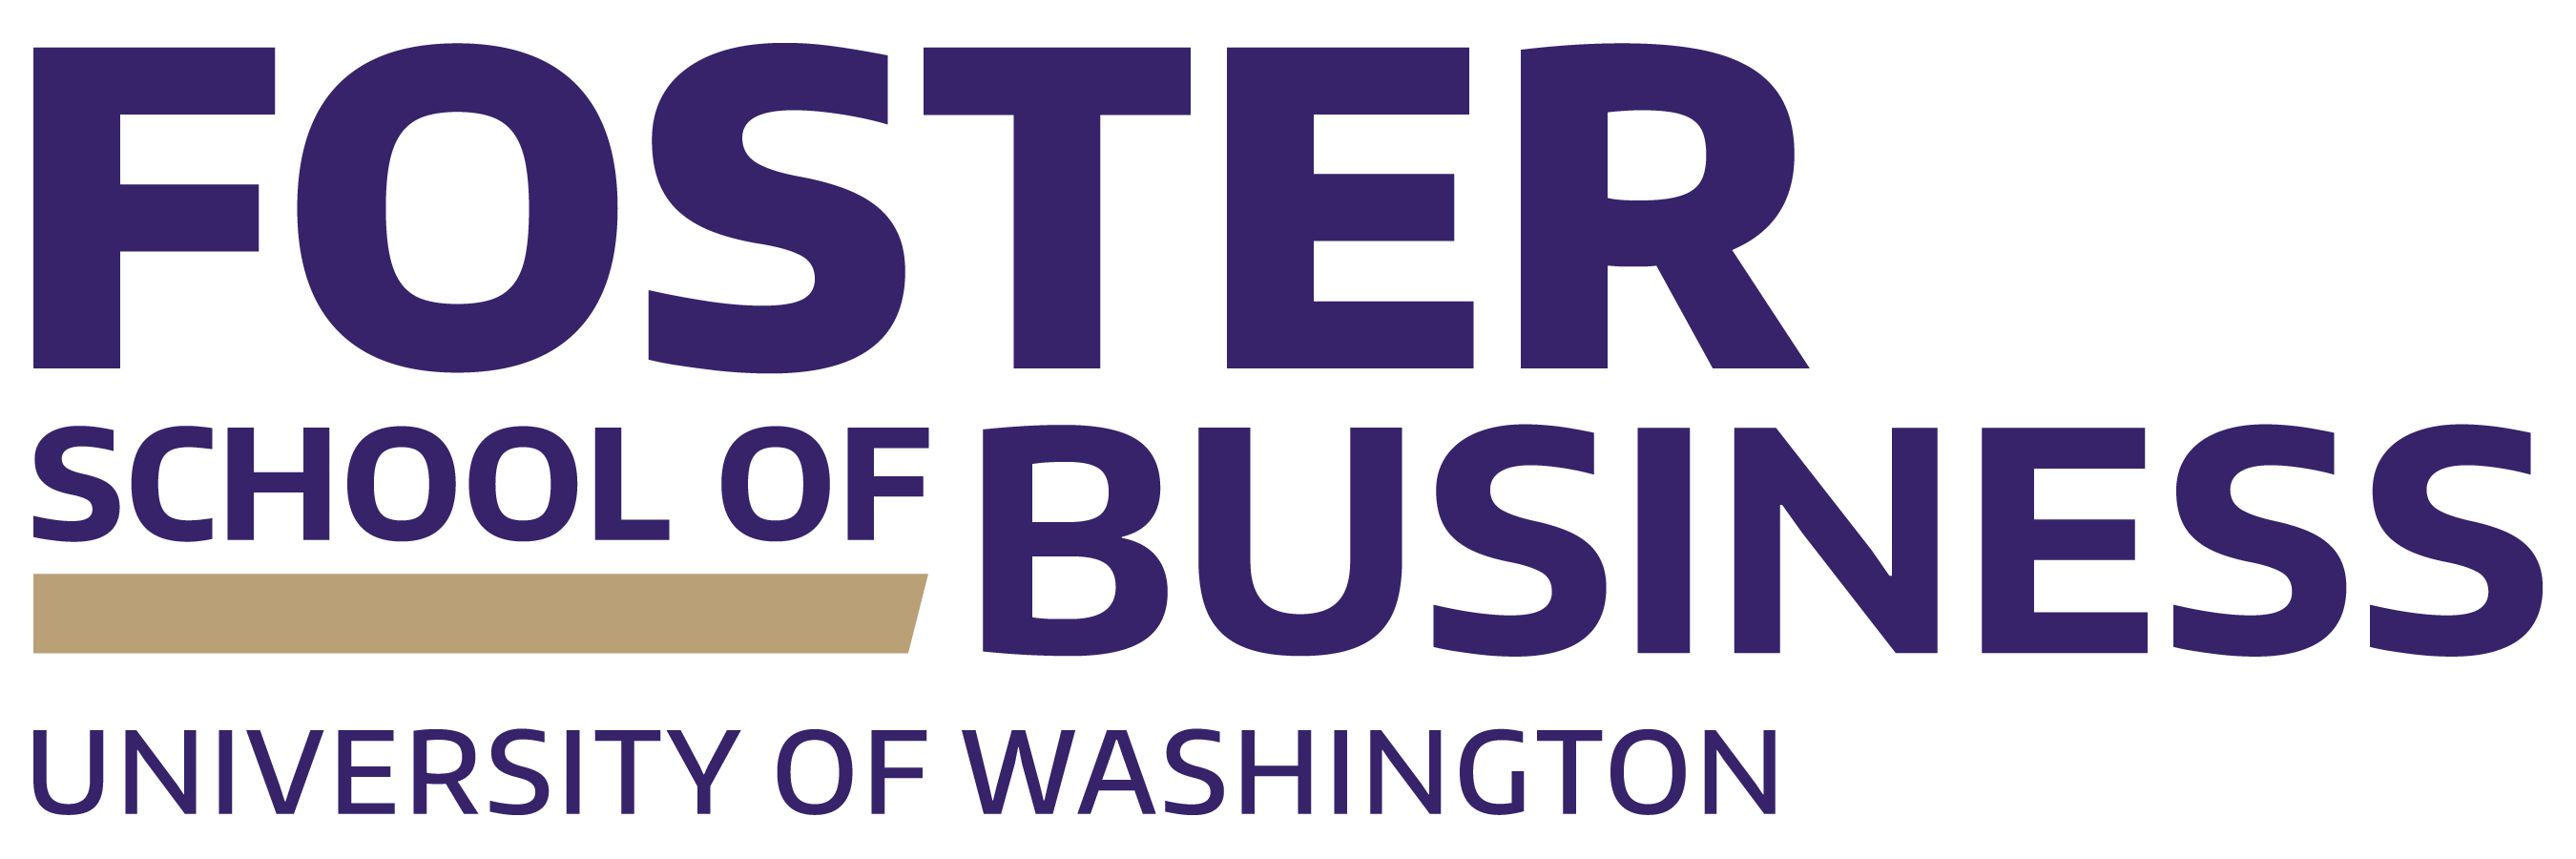 University of Washington Foster School of Business